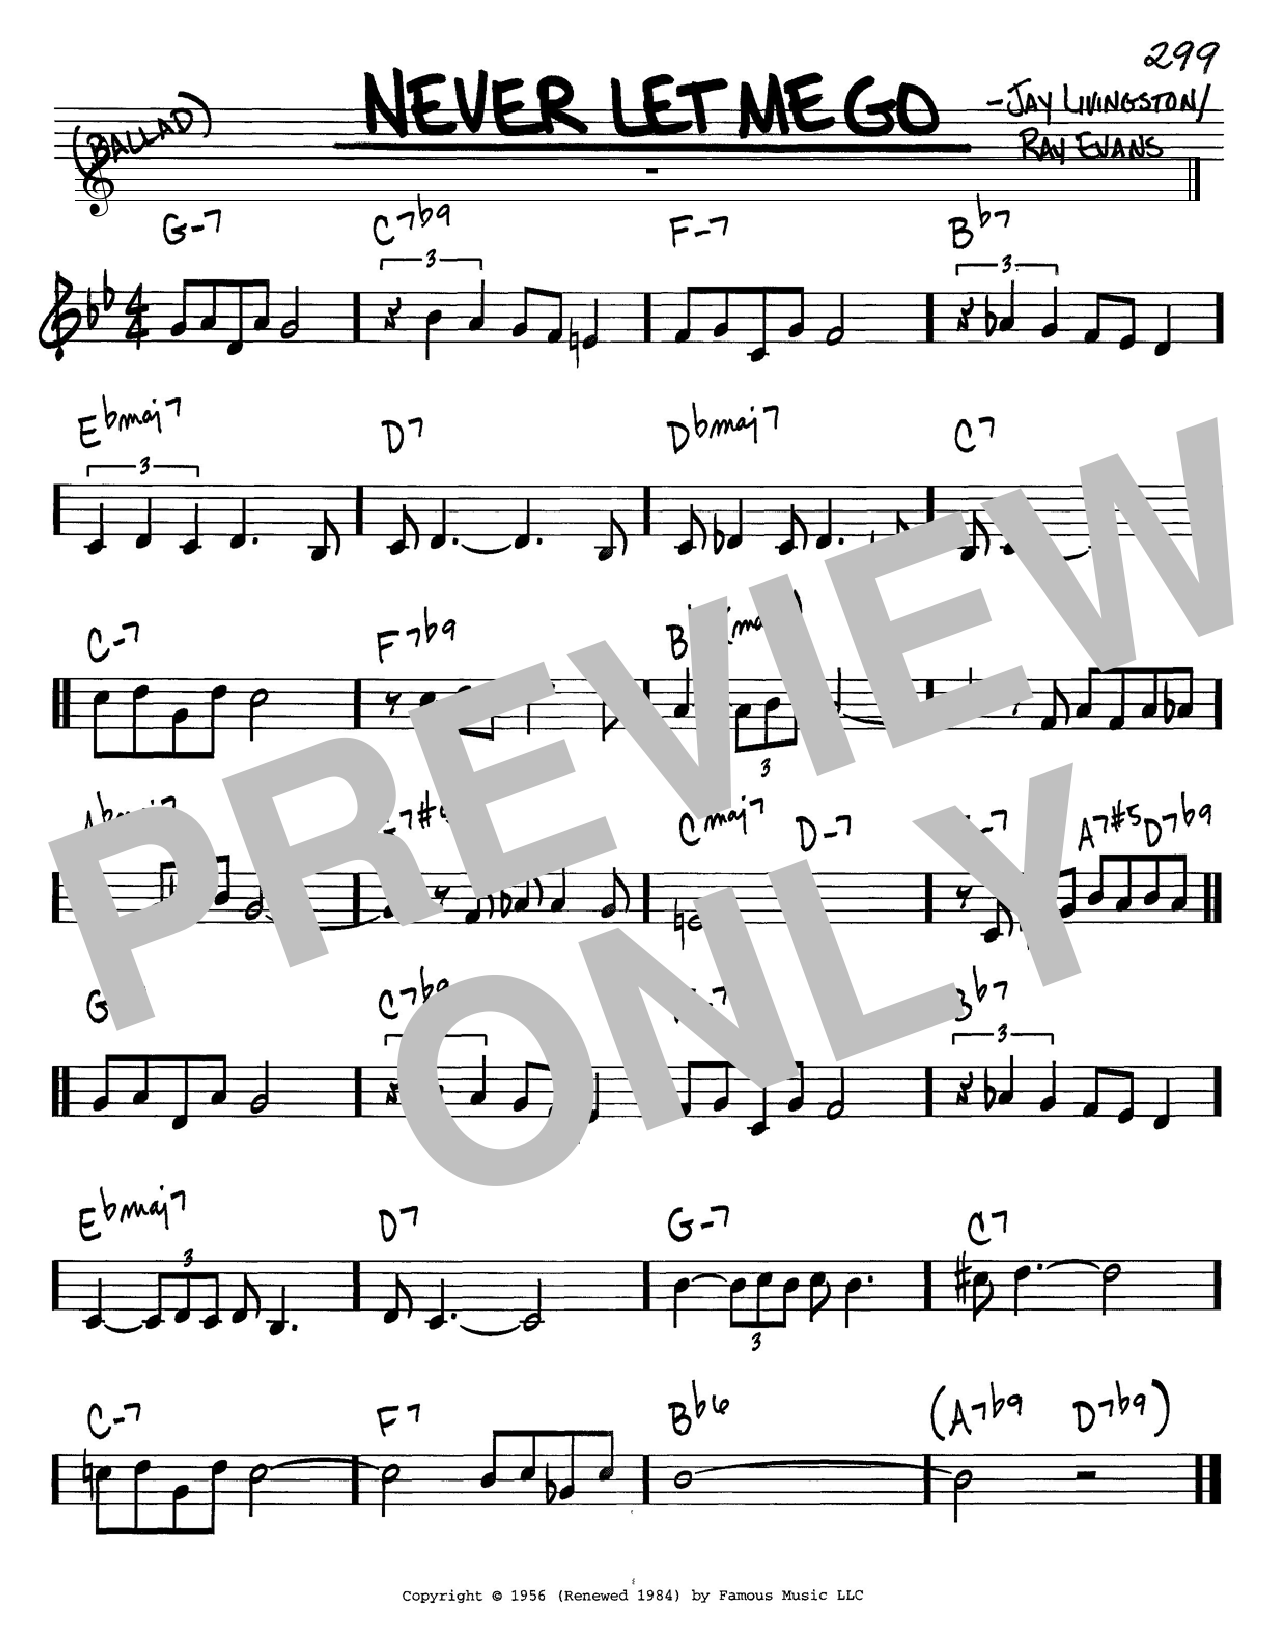 Dinah Washington Never Let Me Go sheet music notes and chords. Download Printable PDF.